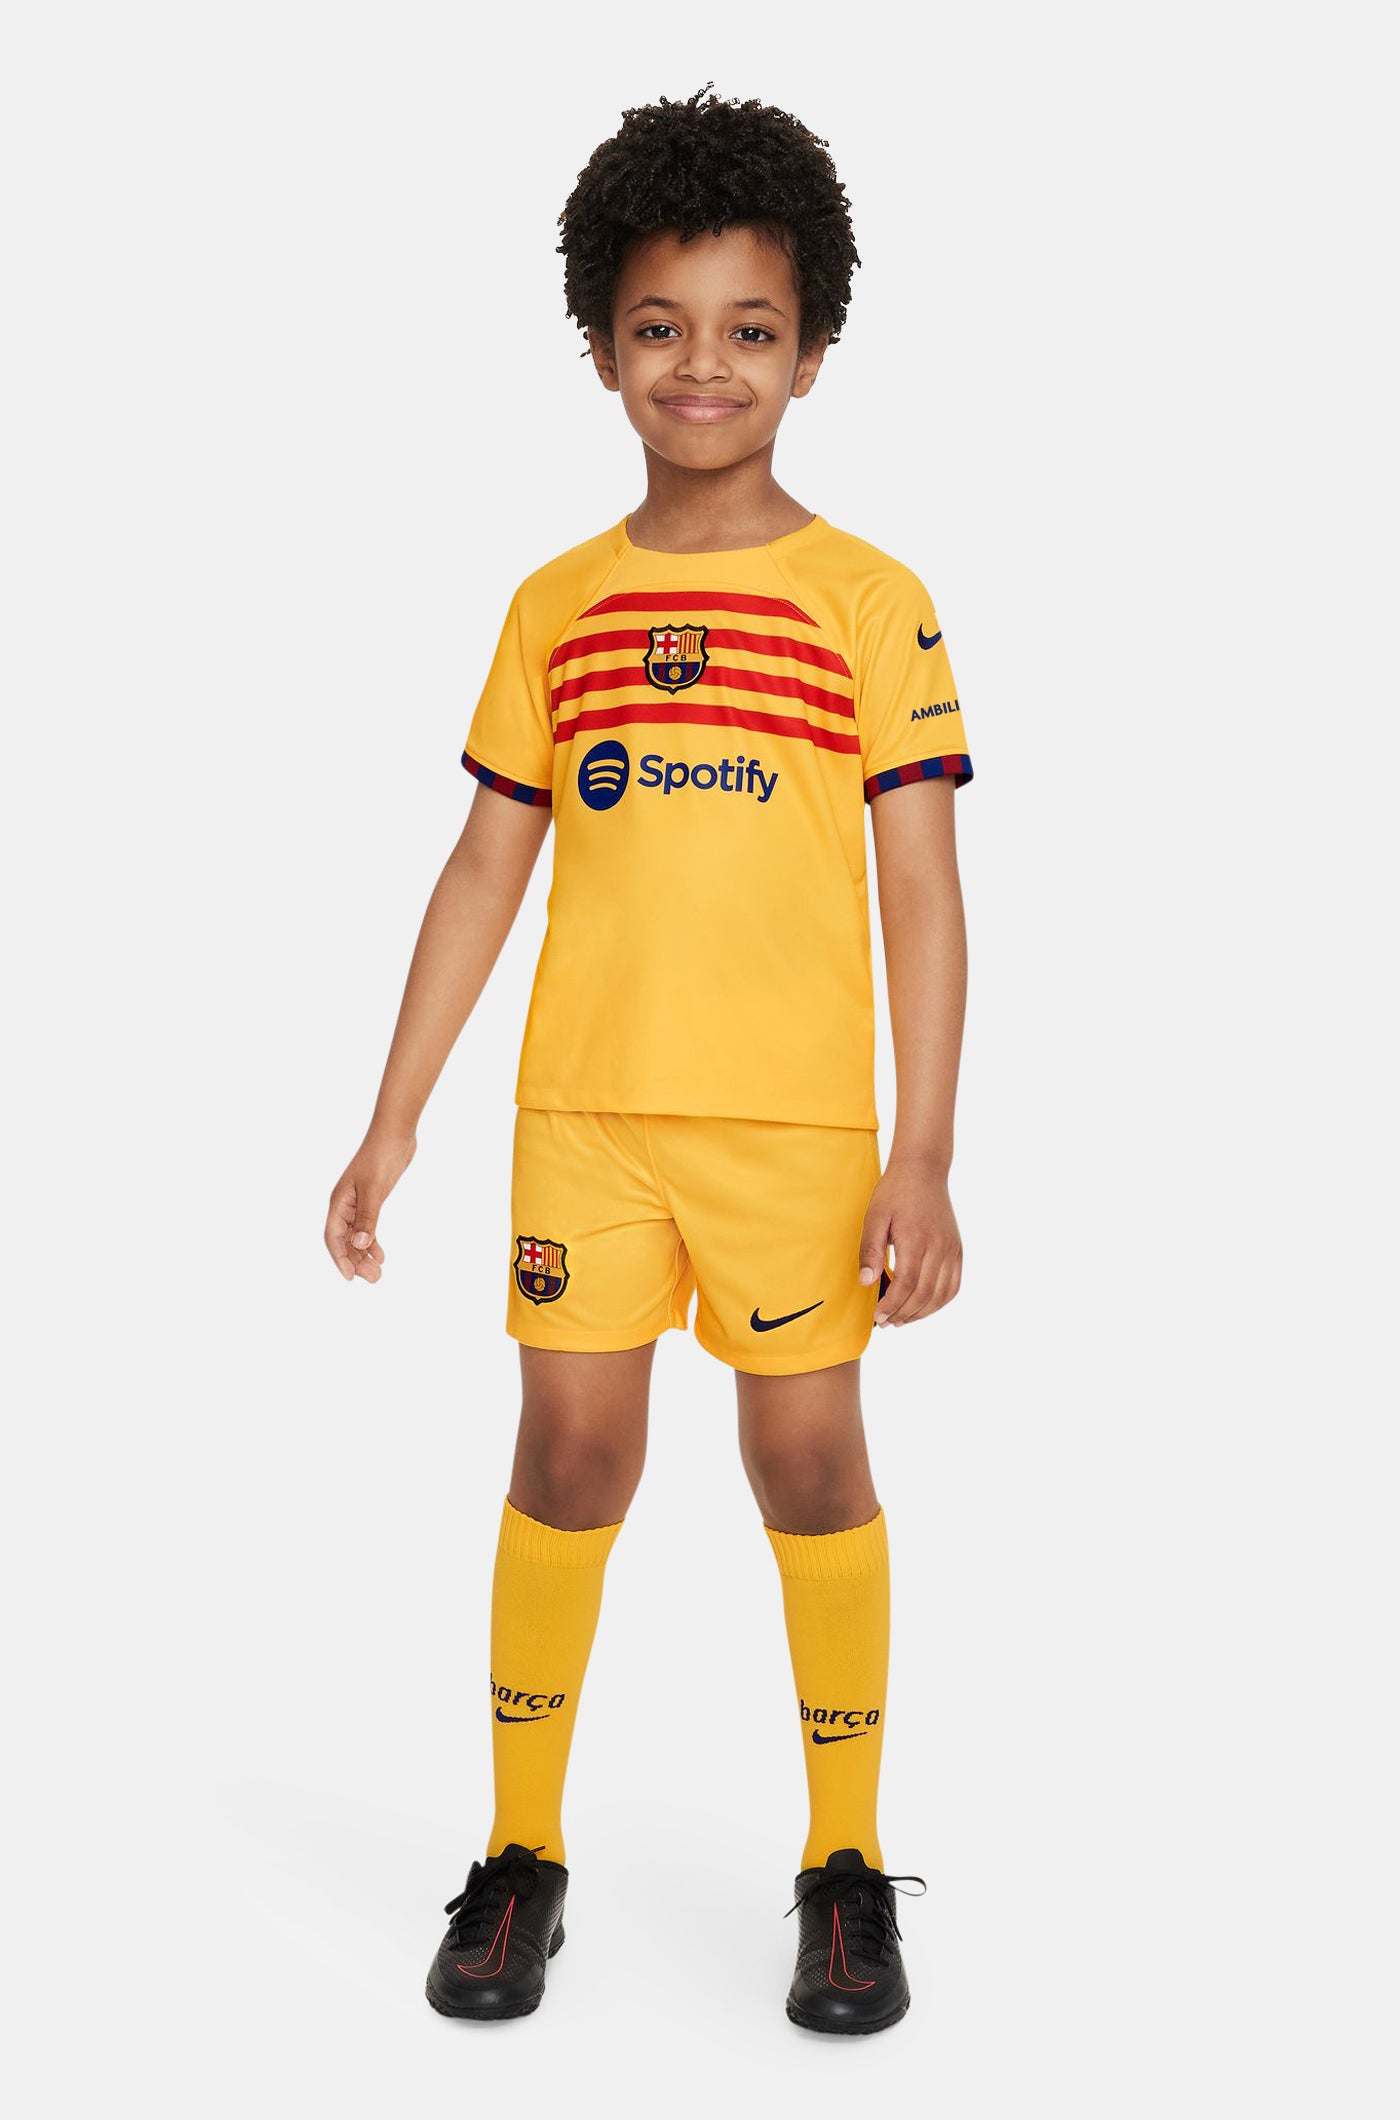 FC Barcelona fourth kit 22/23 - Little Kids - MARCOS A.